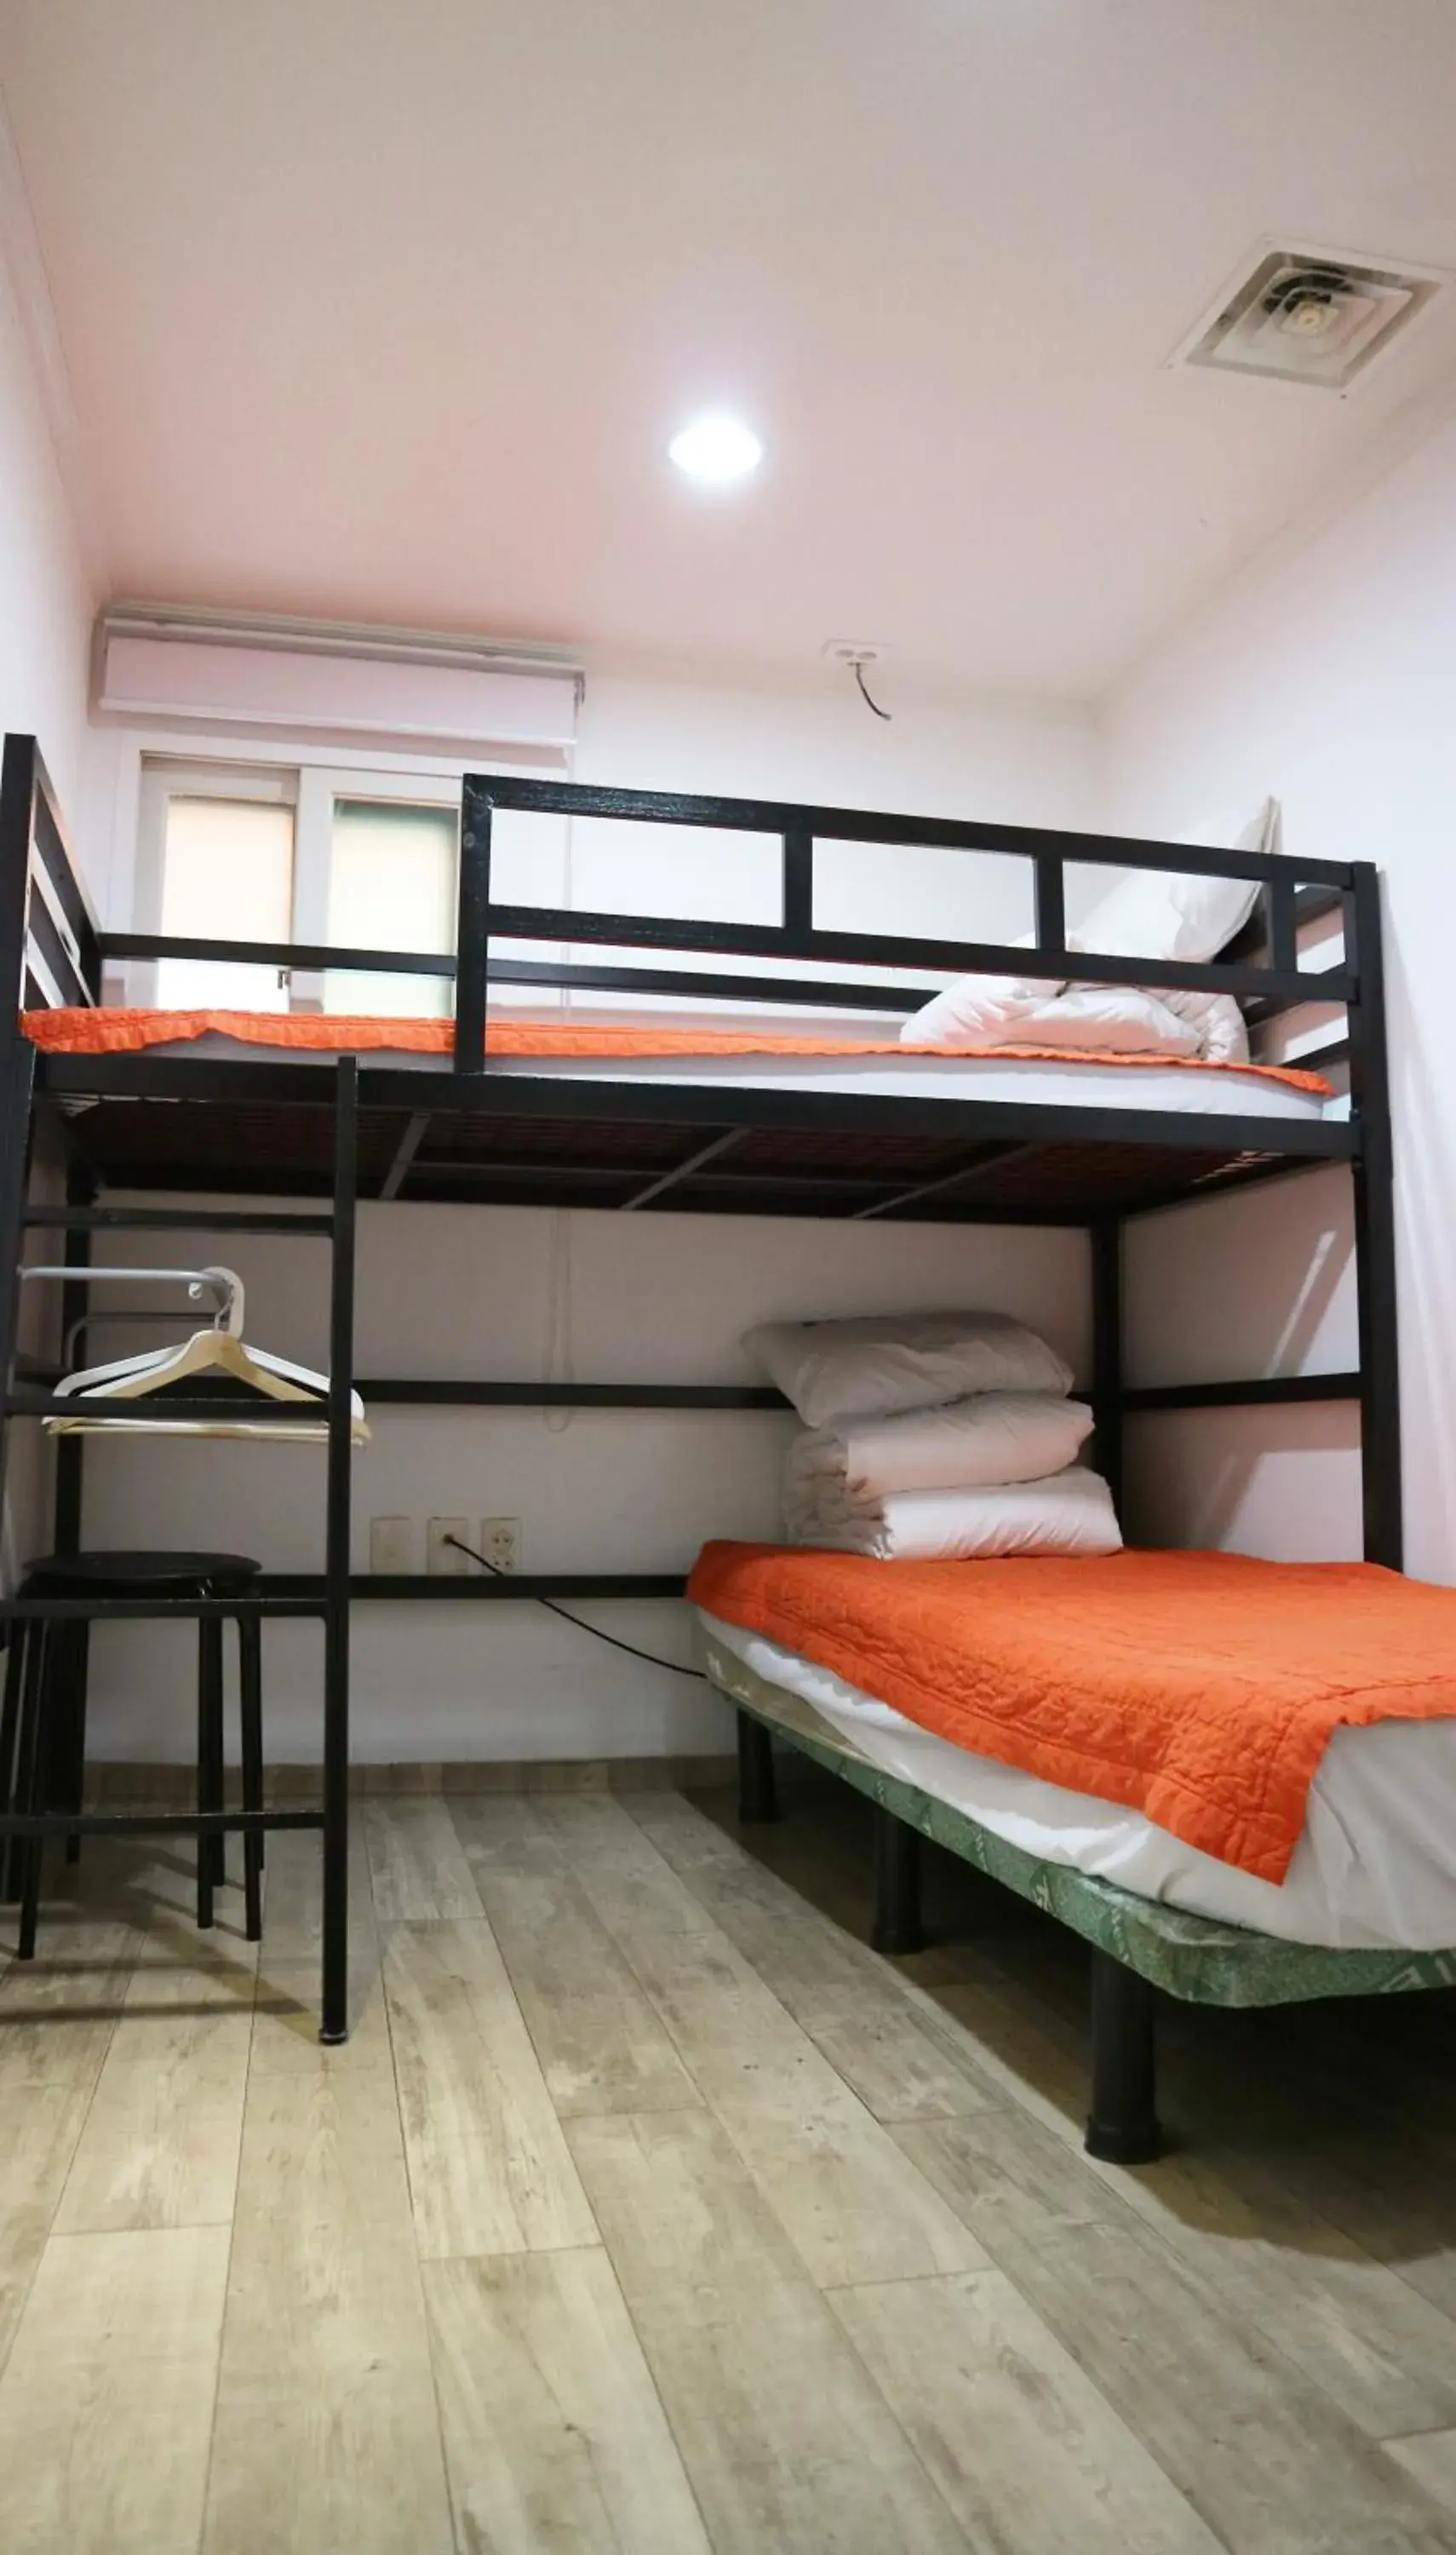 Bunk Bed in Hostel Korea Original